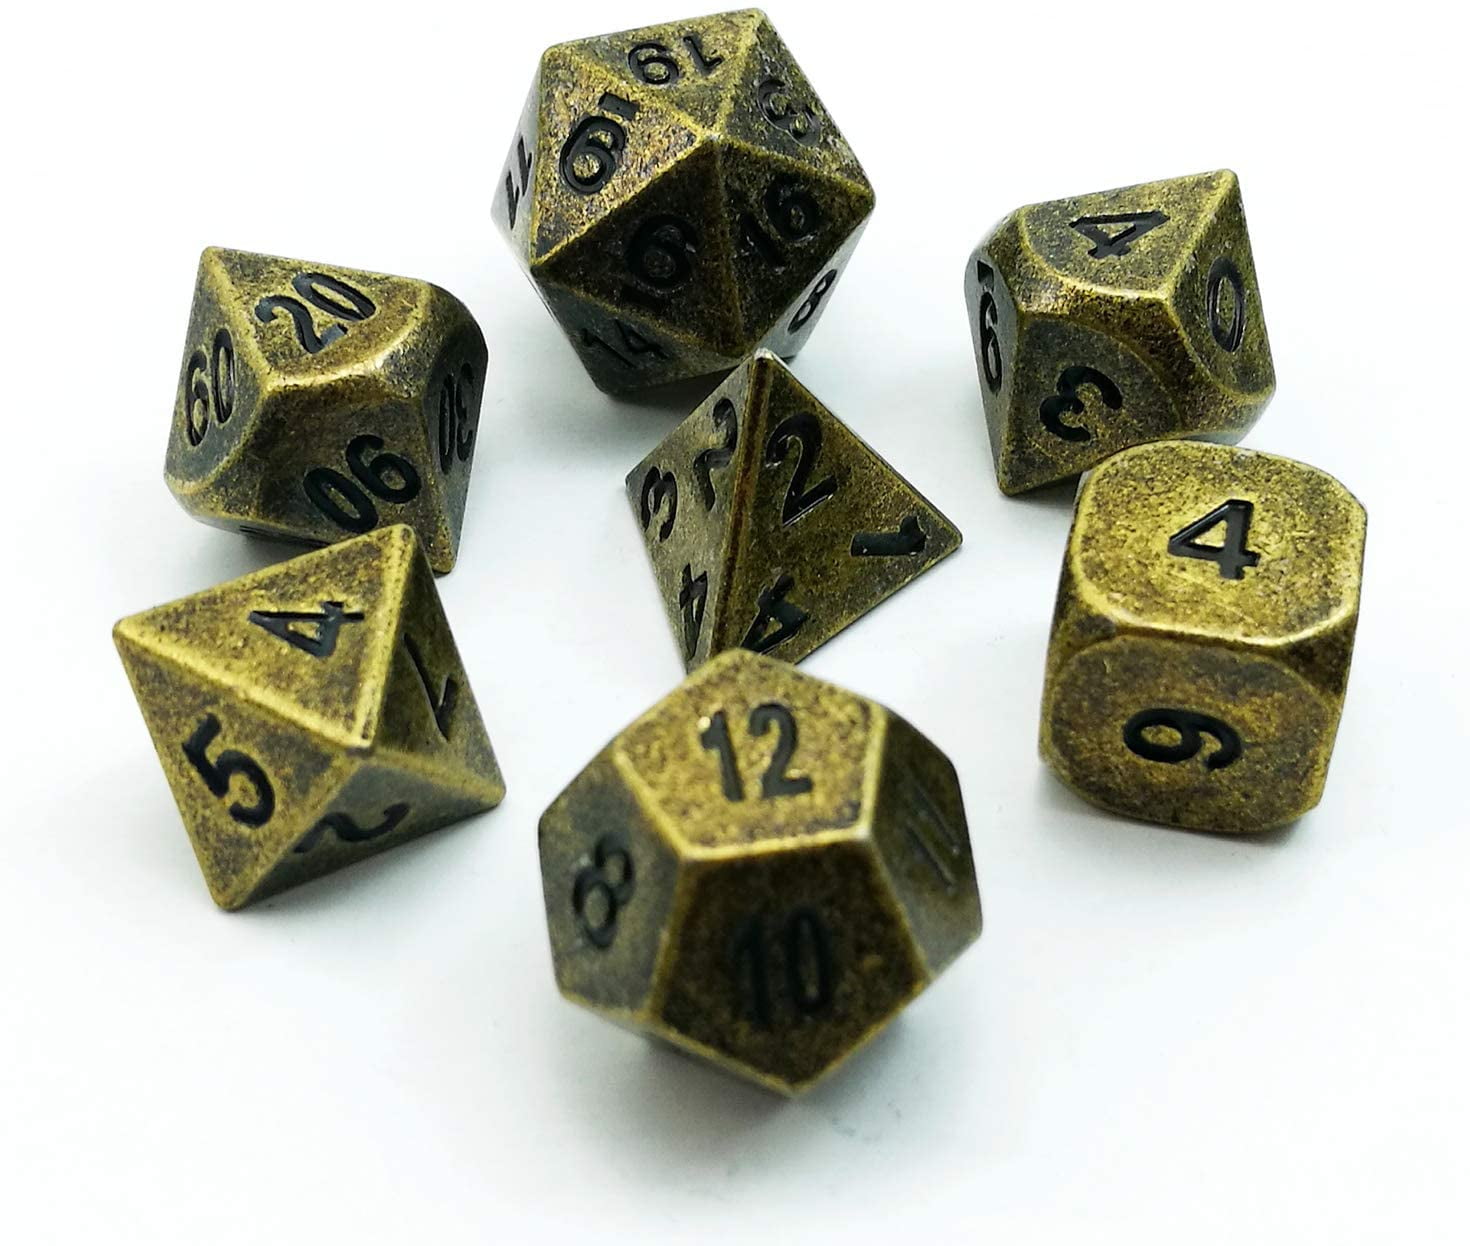 Copper Color Metal and Black Number Metal Polyhedral RPG Dice Set of 7 Dice 